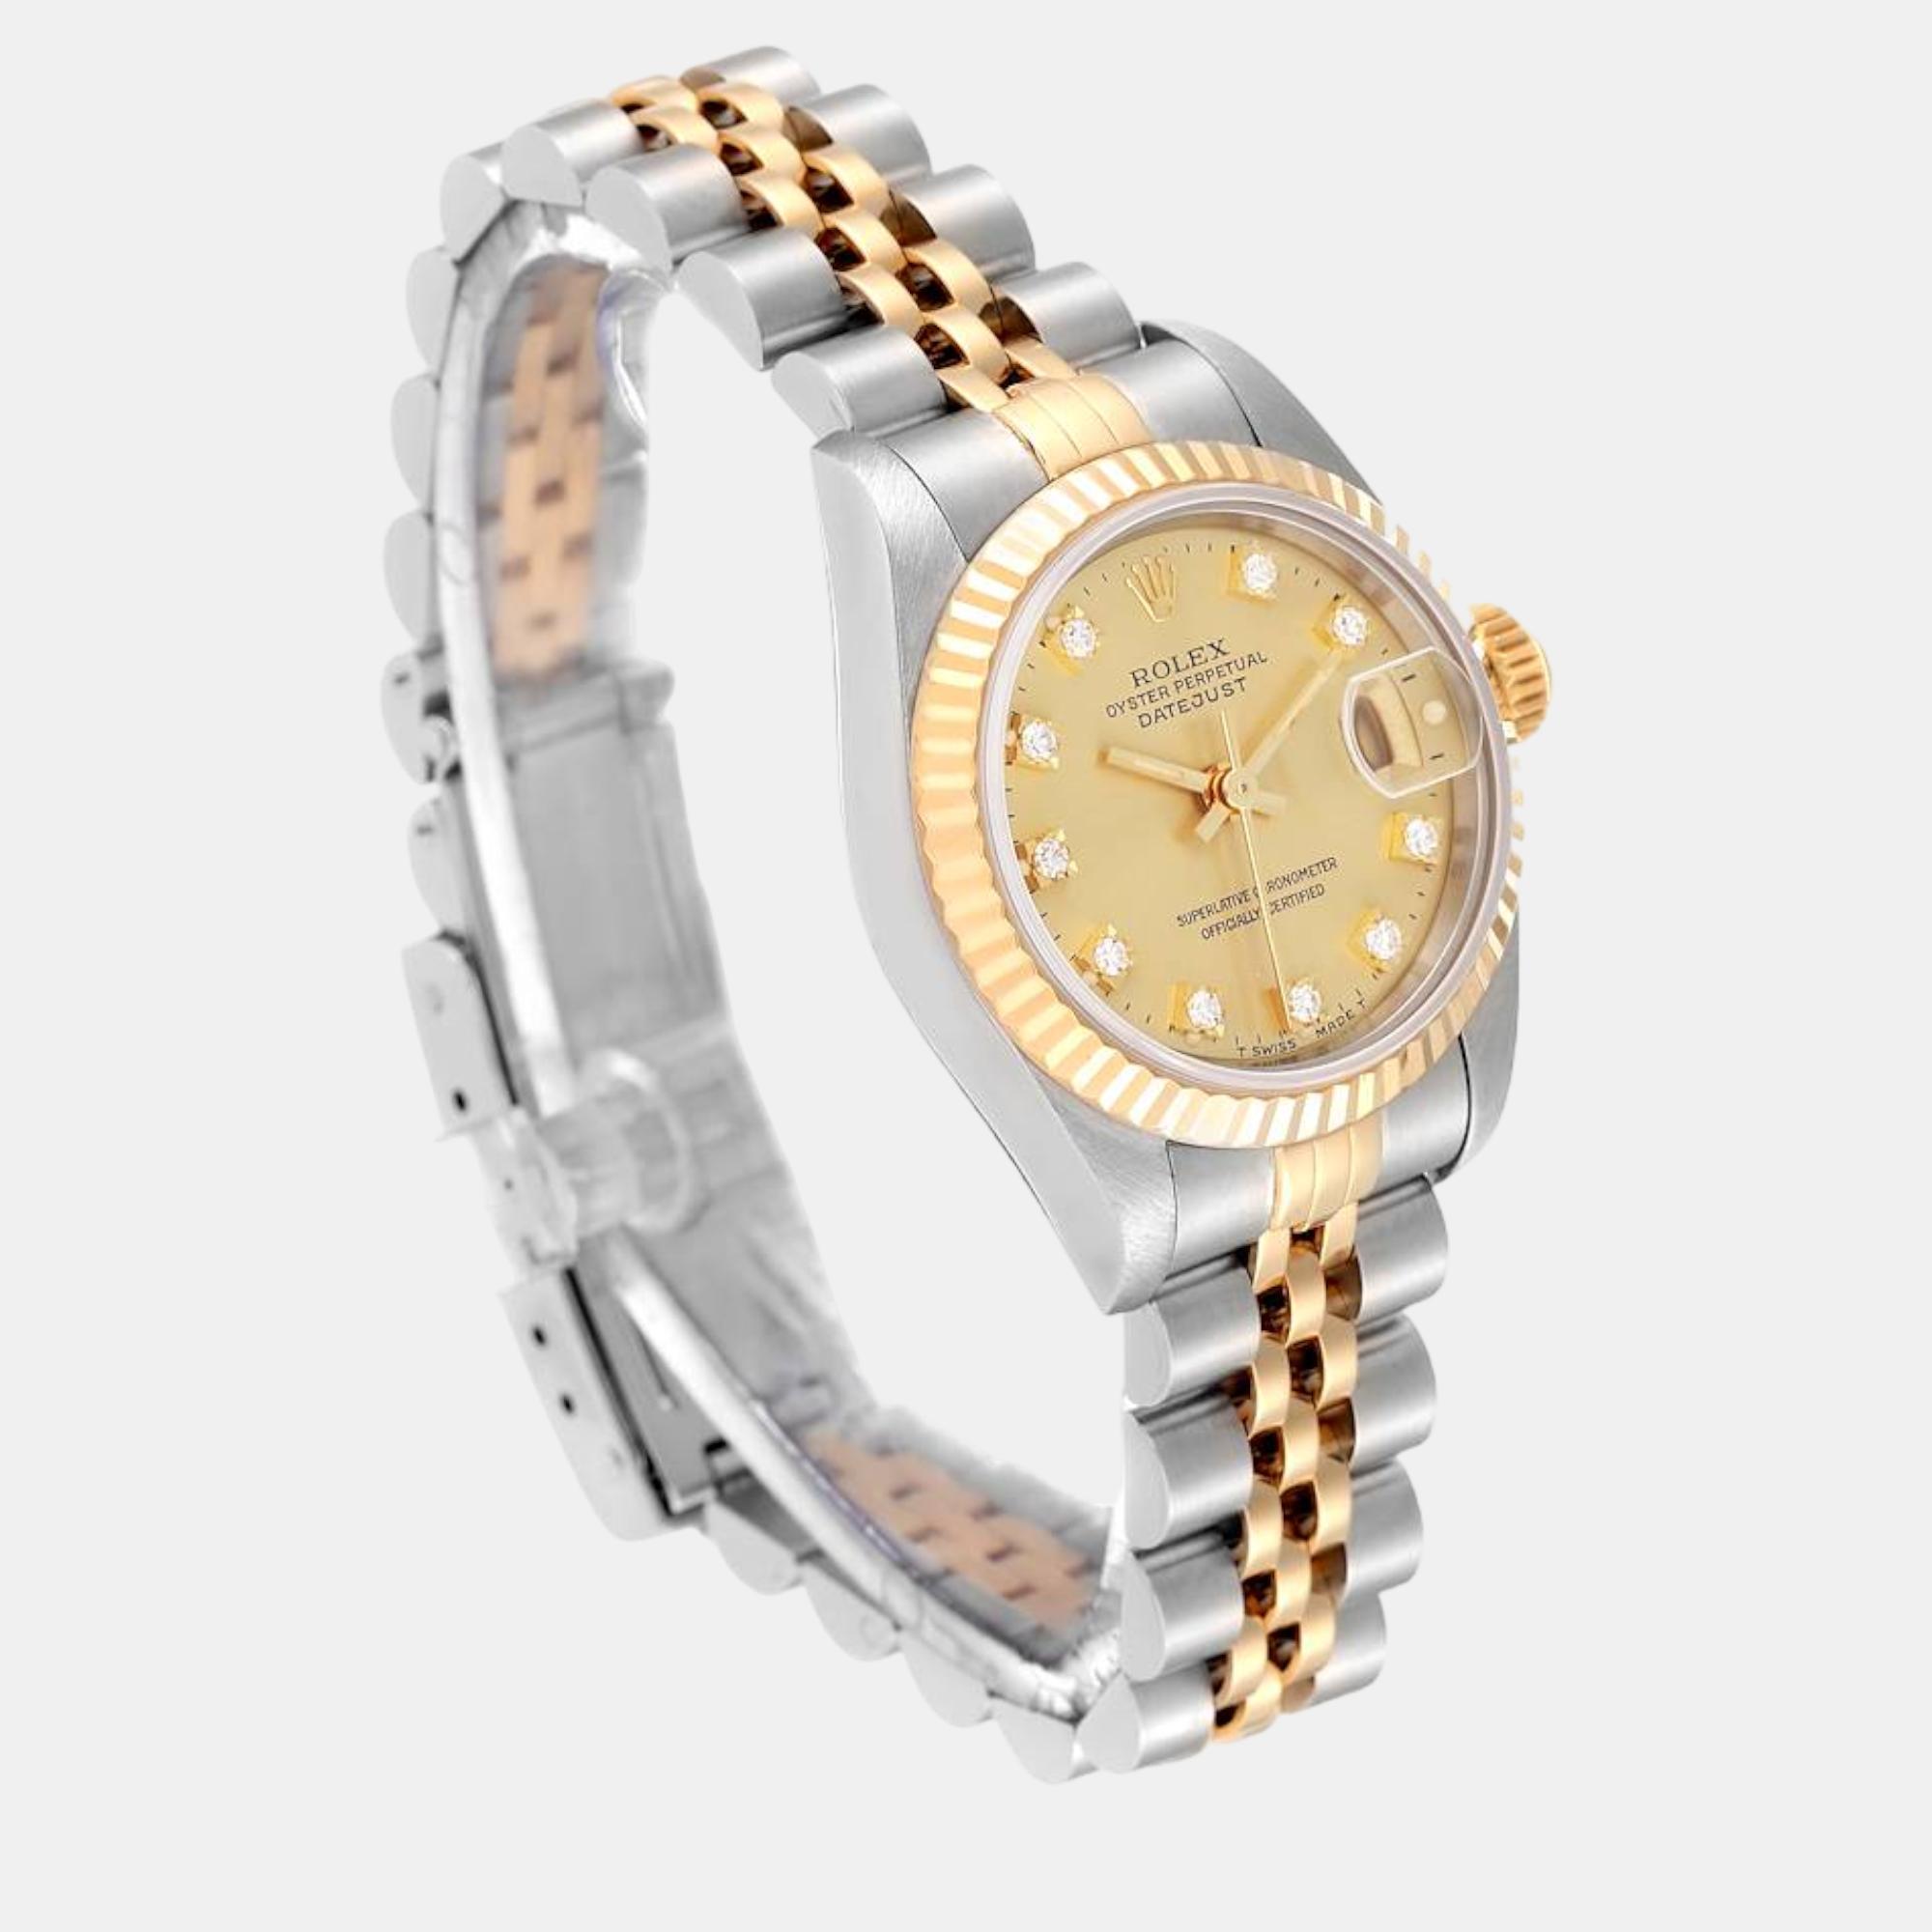 Rolex Datejust Steel Yellow Gold Diamond Dial Ladies Watch 69173